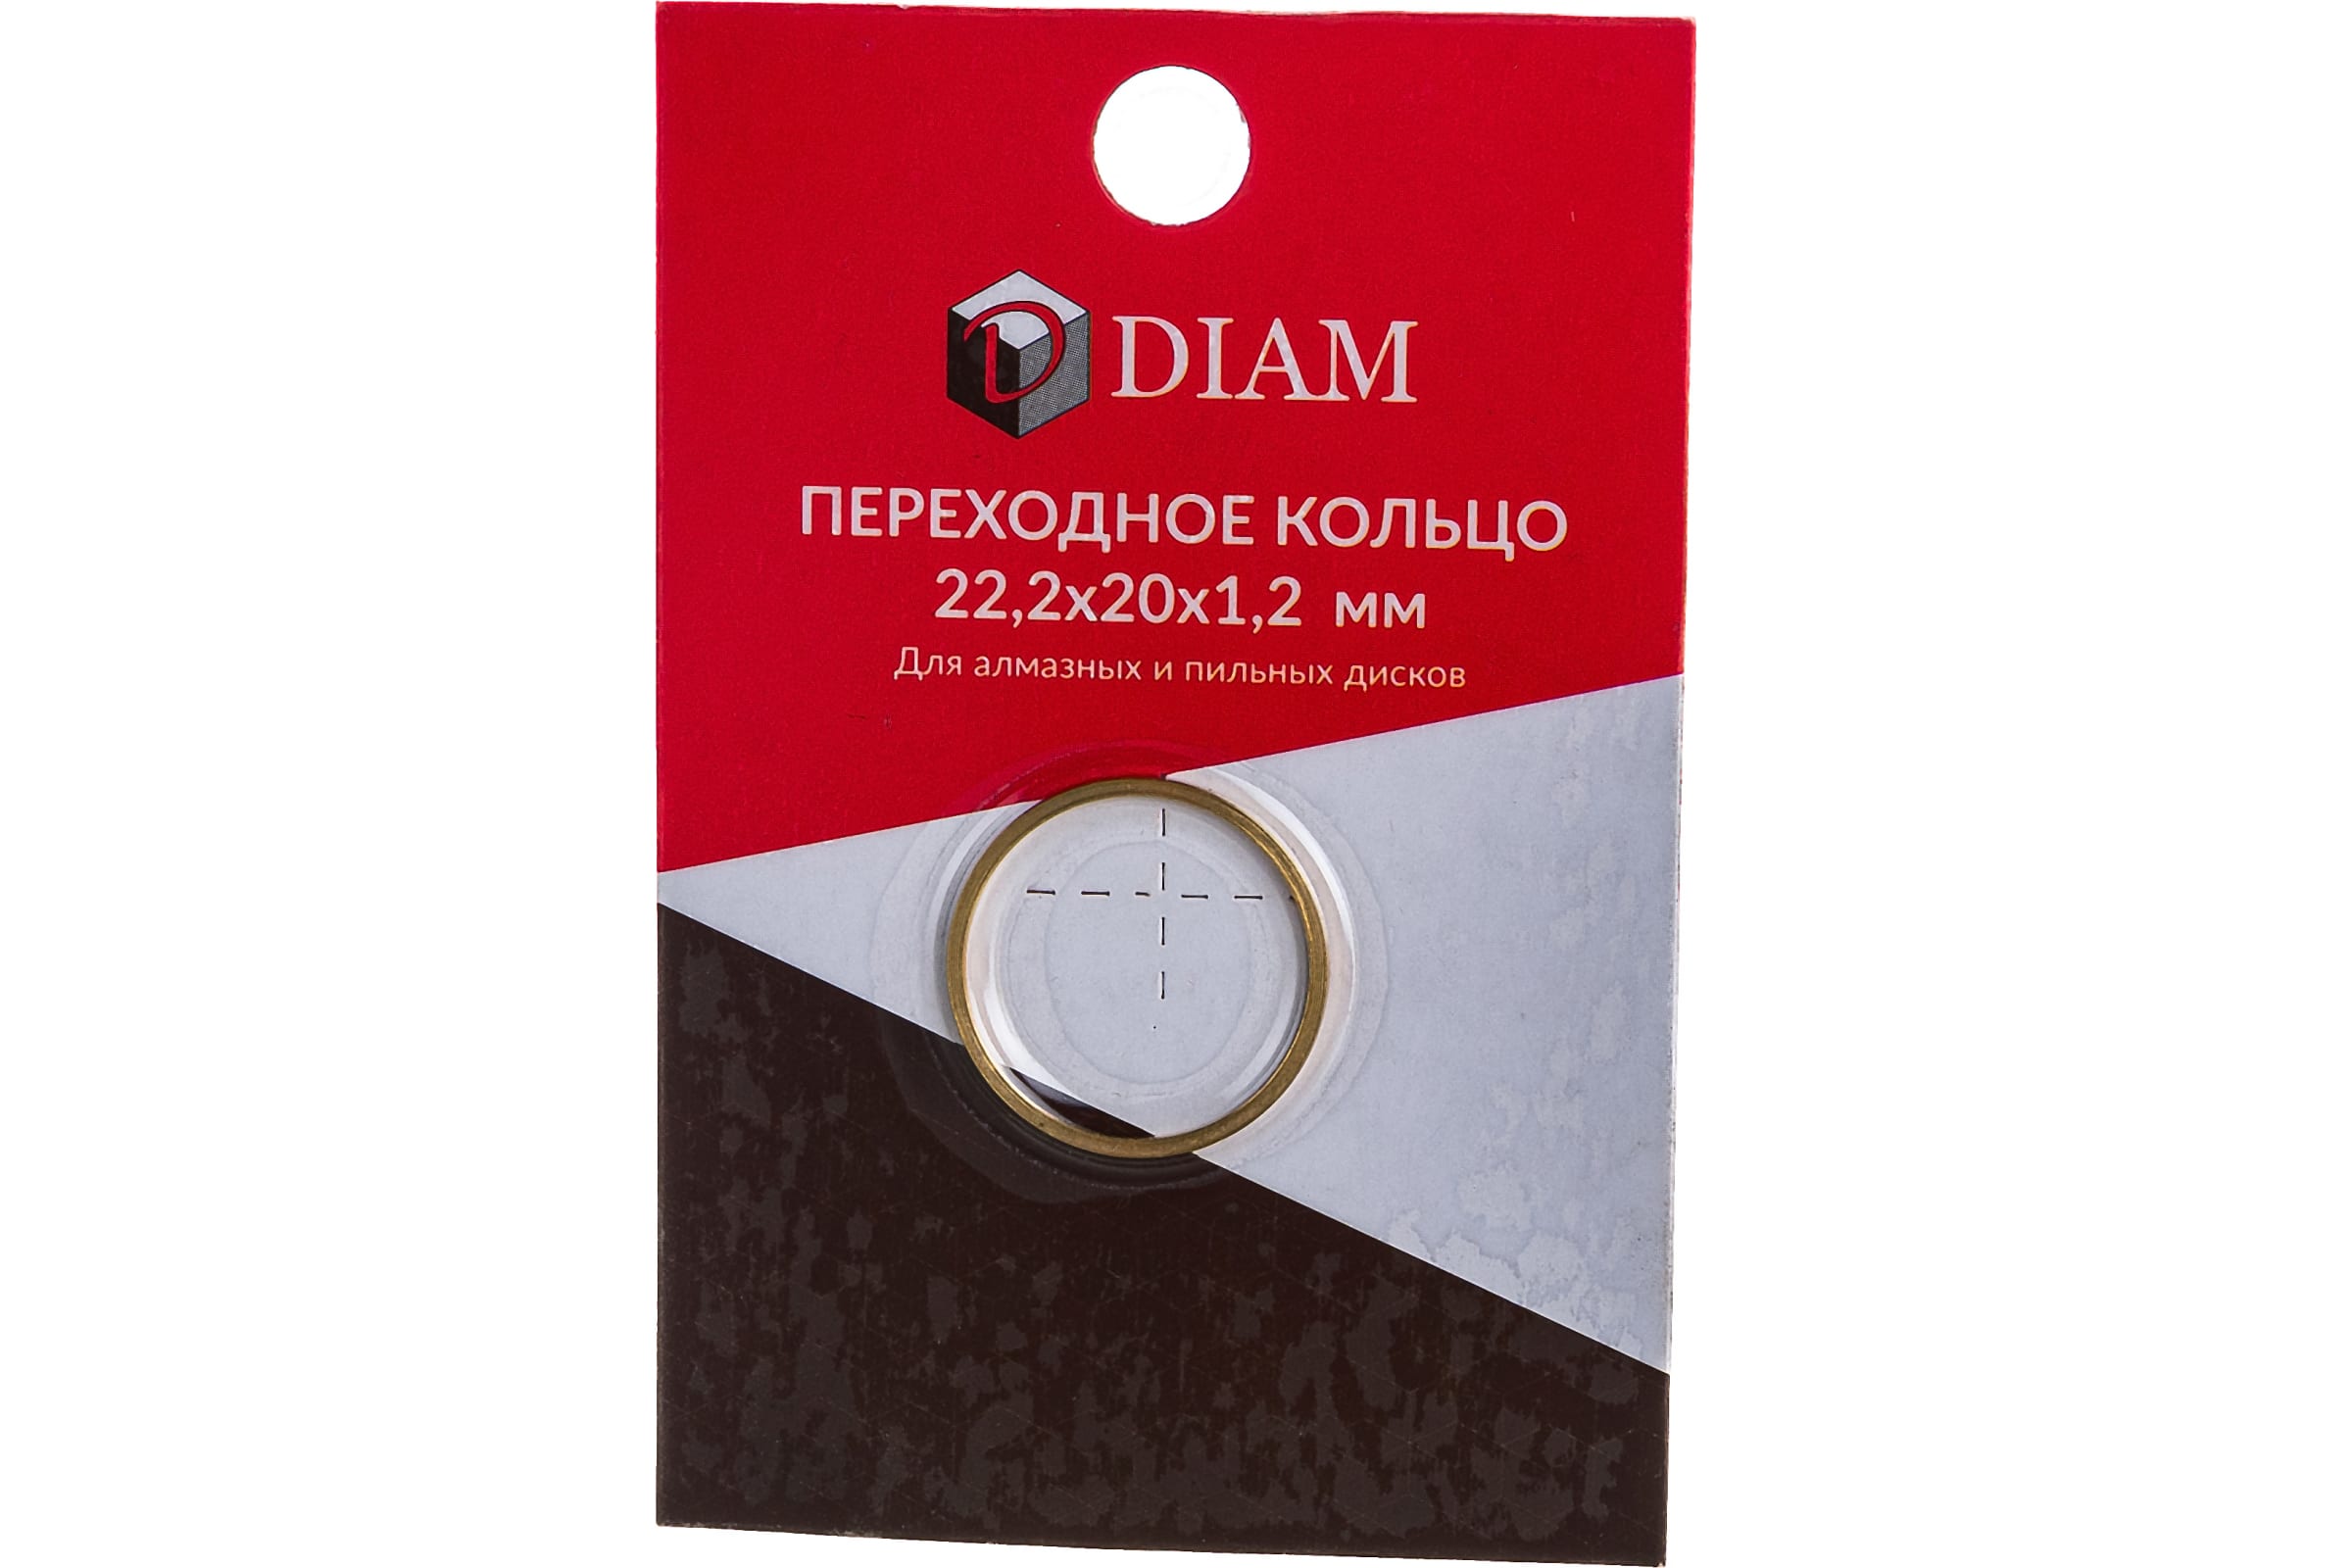 DIAM Переходное кольцо 22,2х20х1,2 640082 переходное кольцо 25 4x22 2 мм